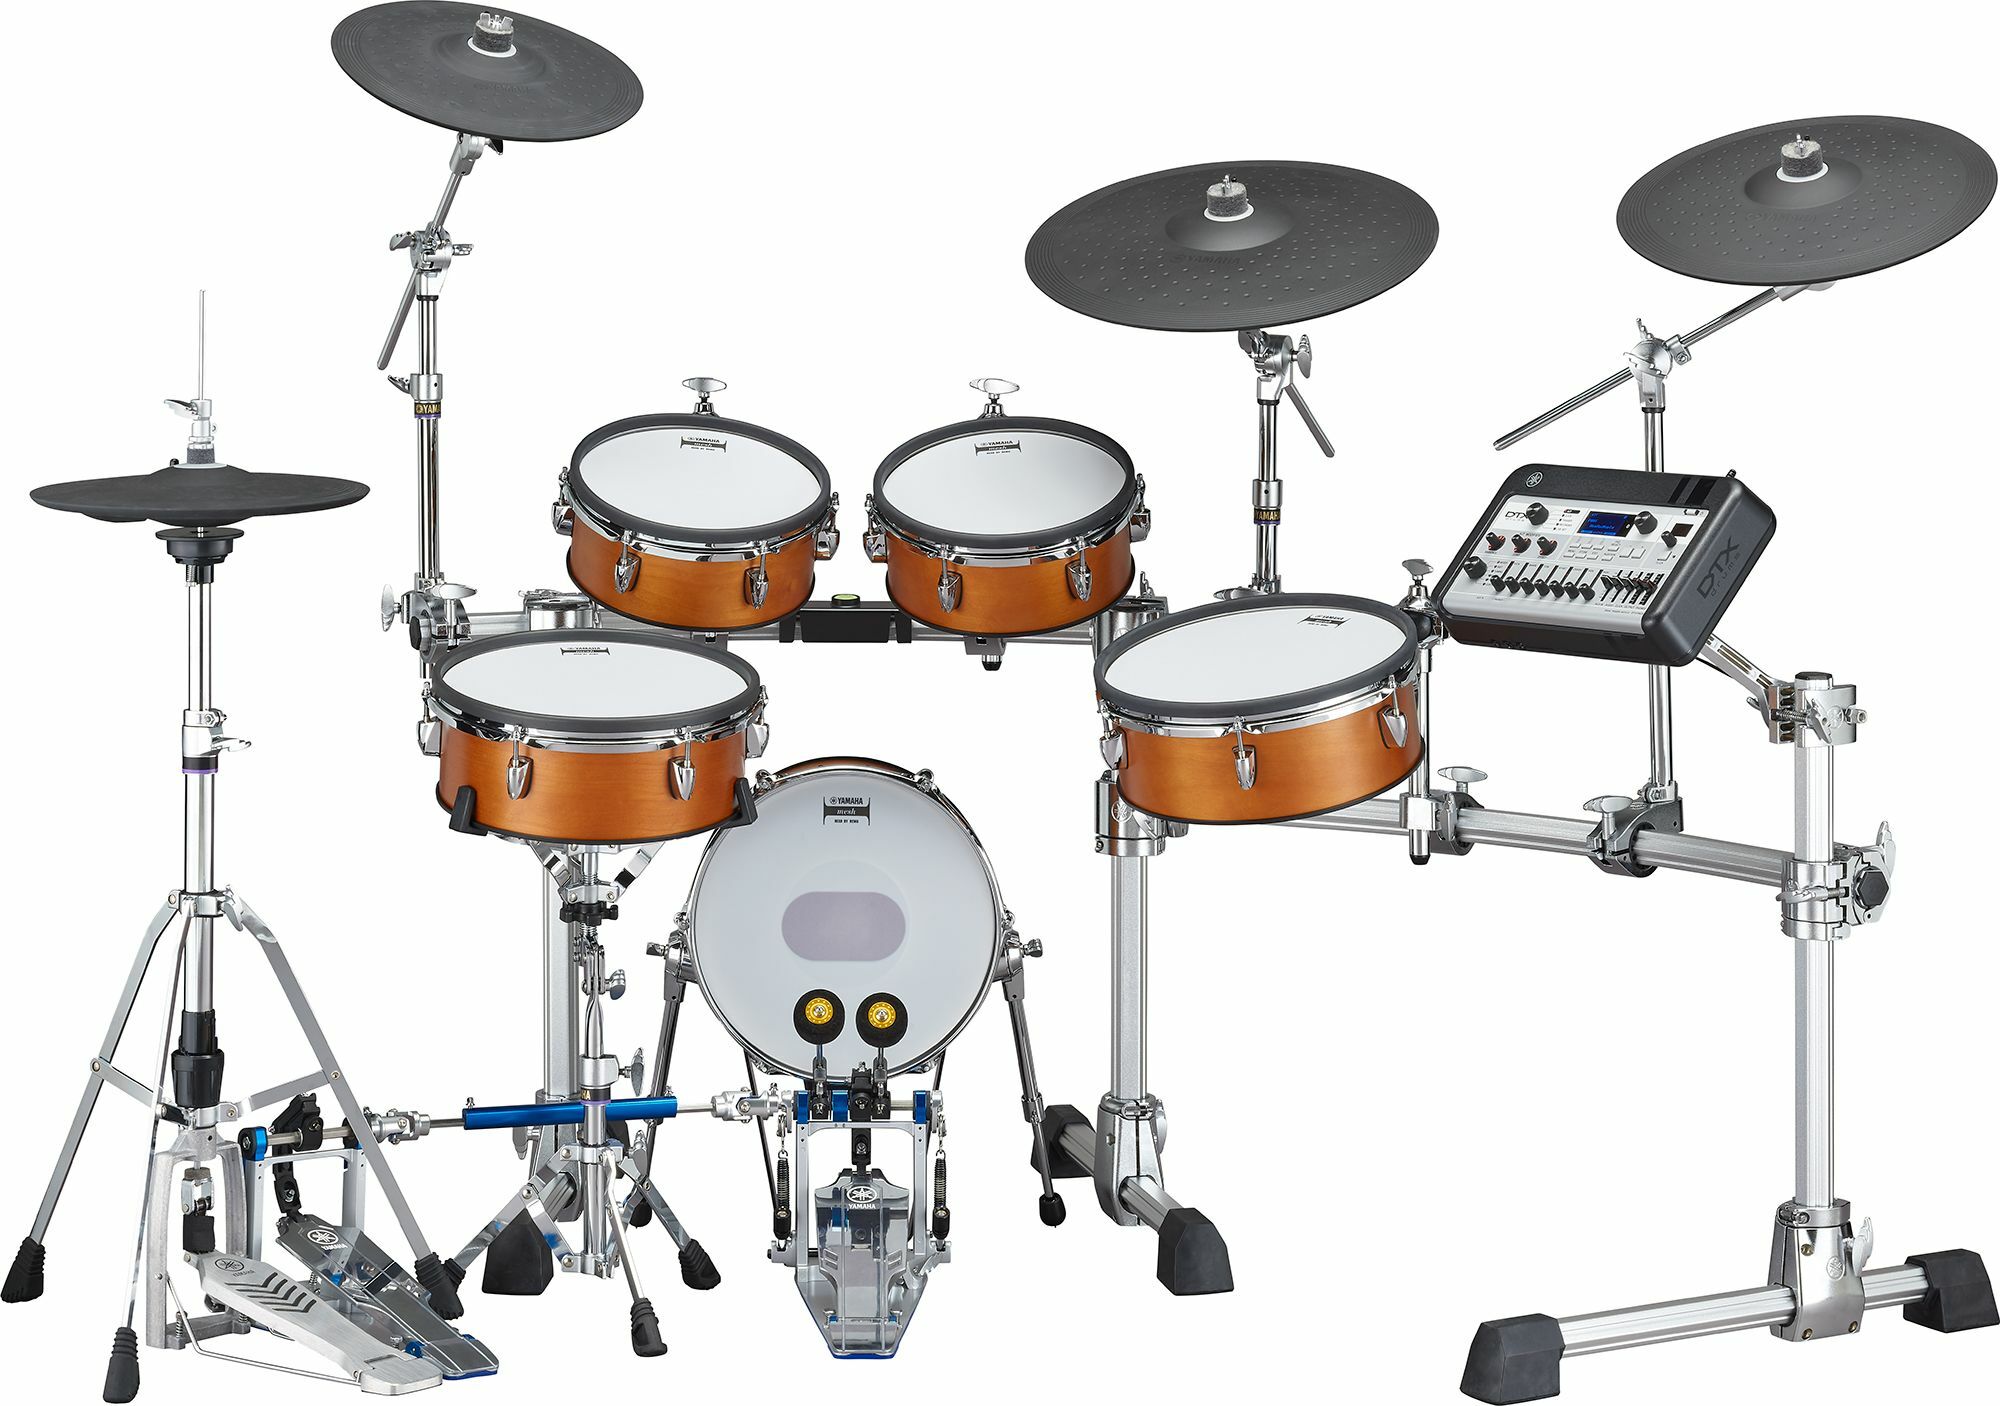 Yamaha Dtx10-km Electronic Drum Kit Mesh Black Forrest - Electronic drum kit & set - Main picture